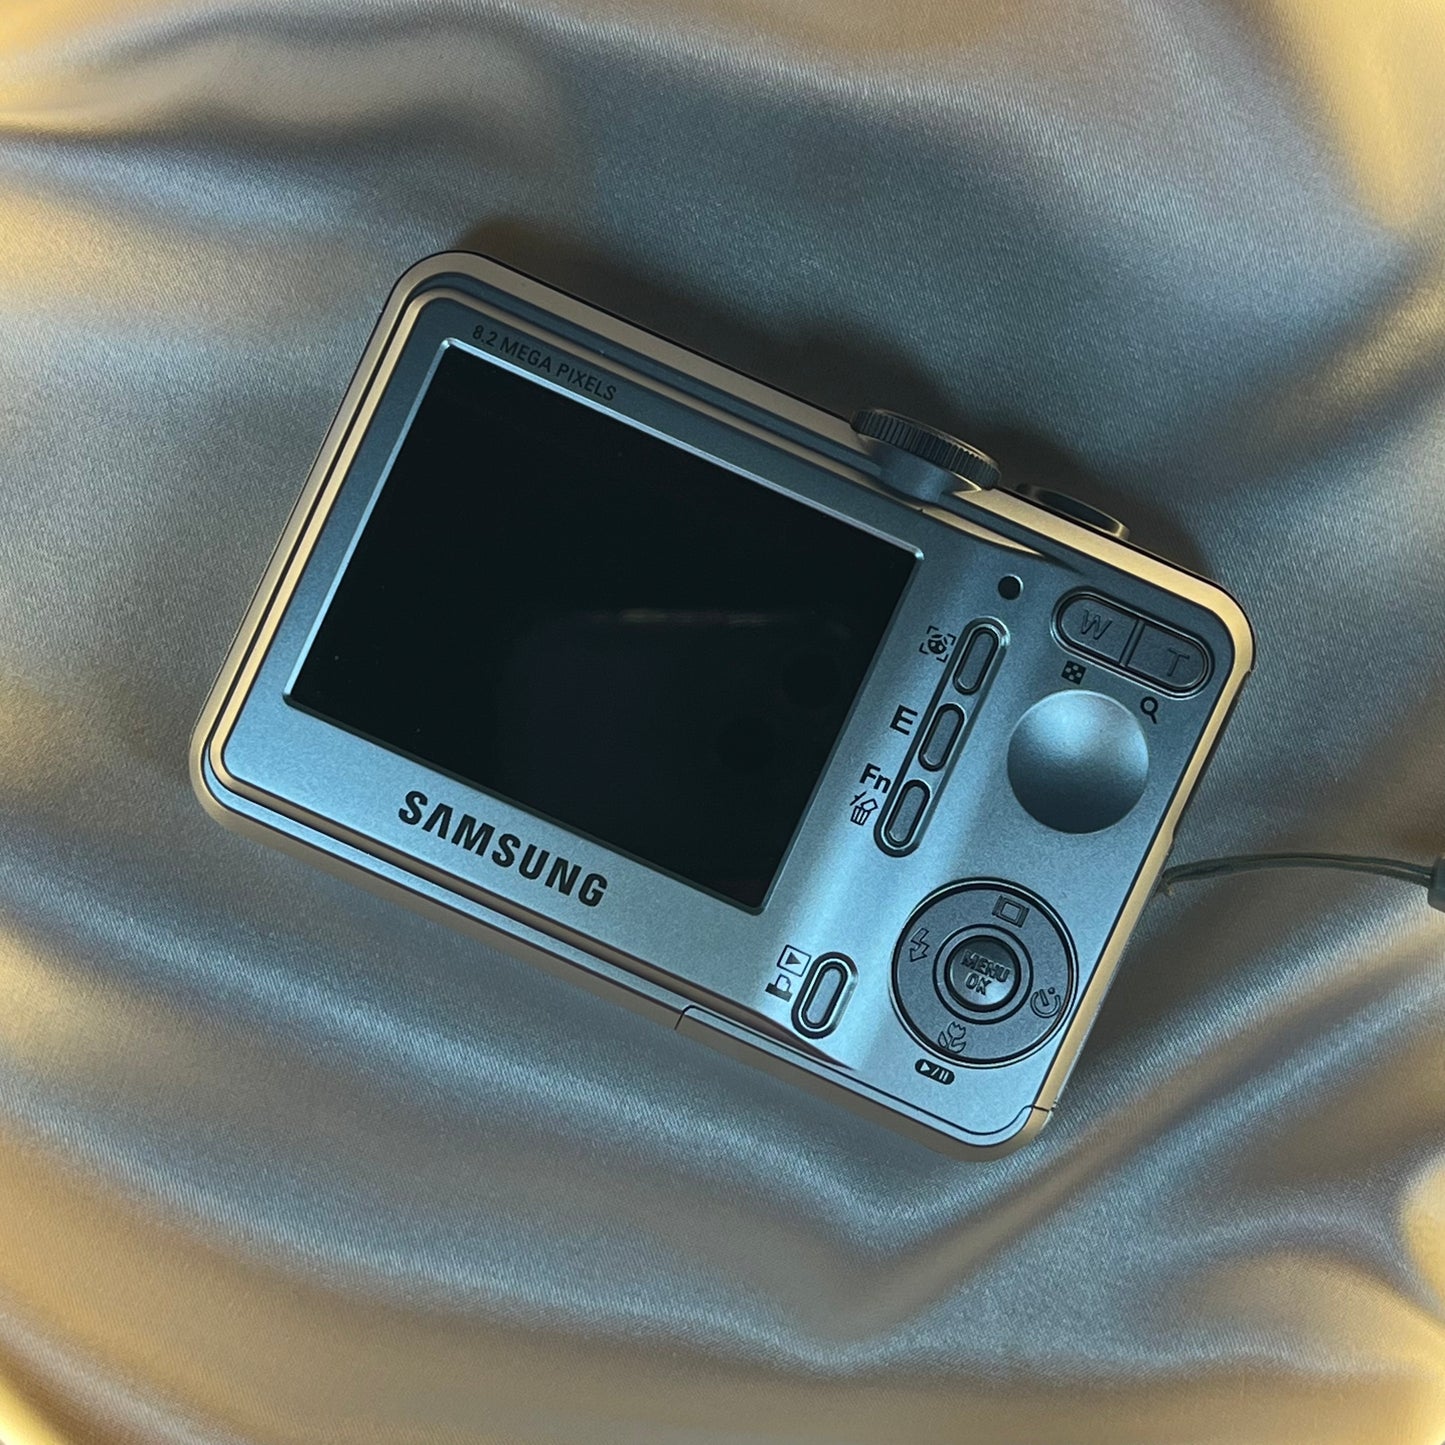 Samsung D860 8.1 mp Silver